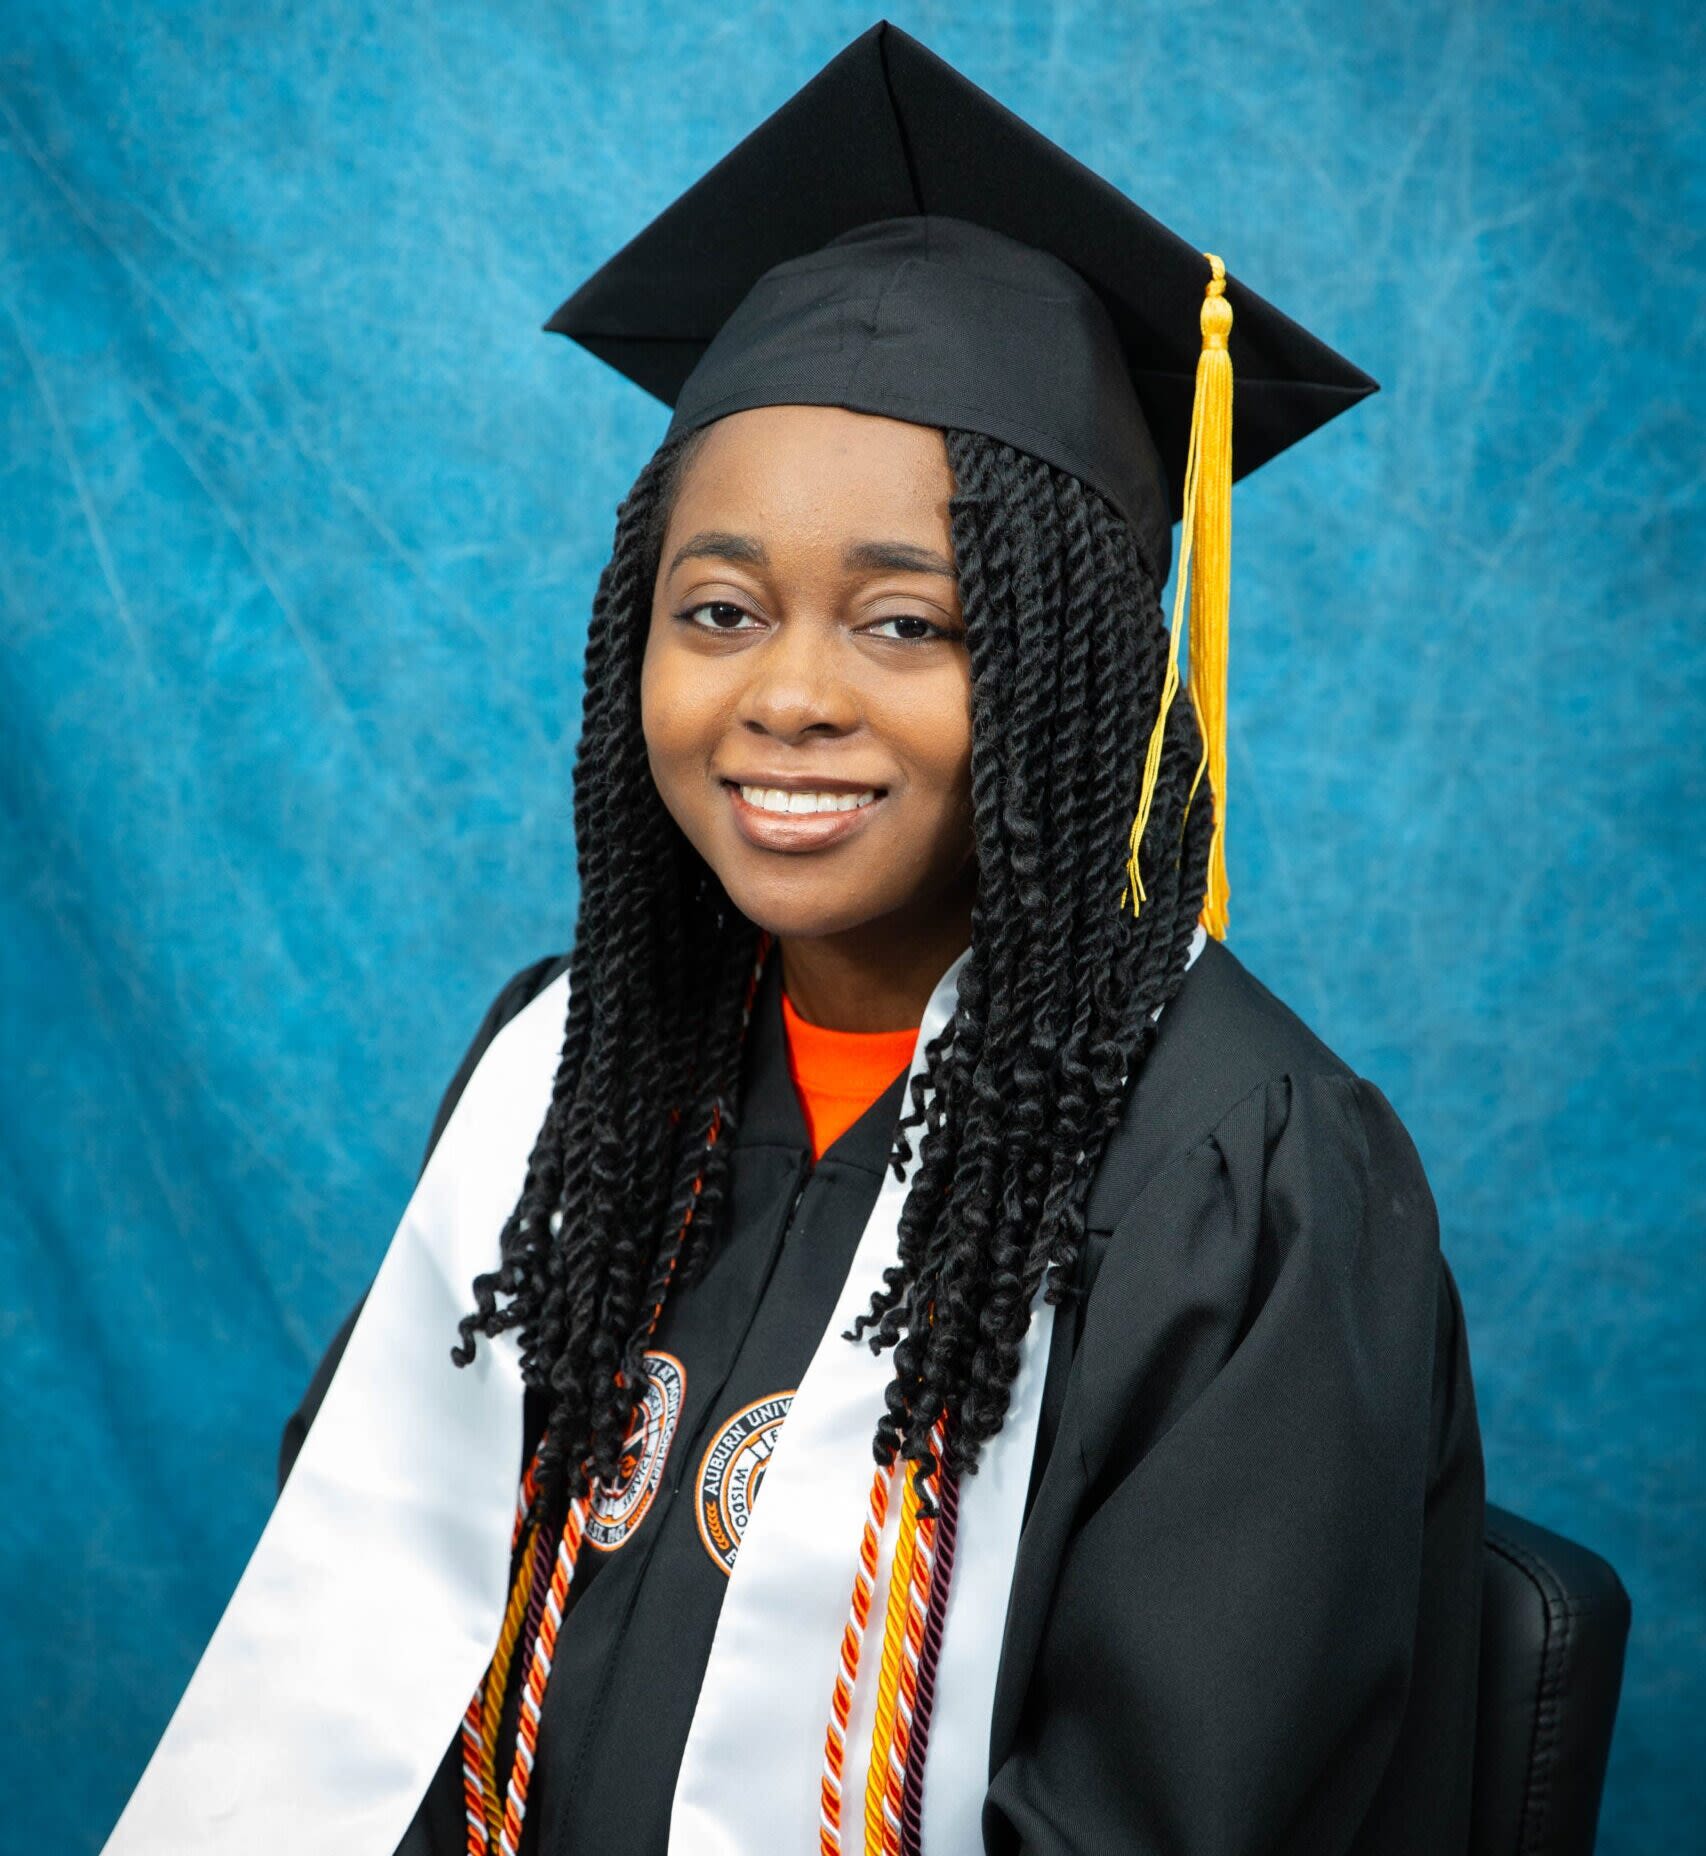 Selma resident graduates from AUM - The Selma Times‑Journal